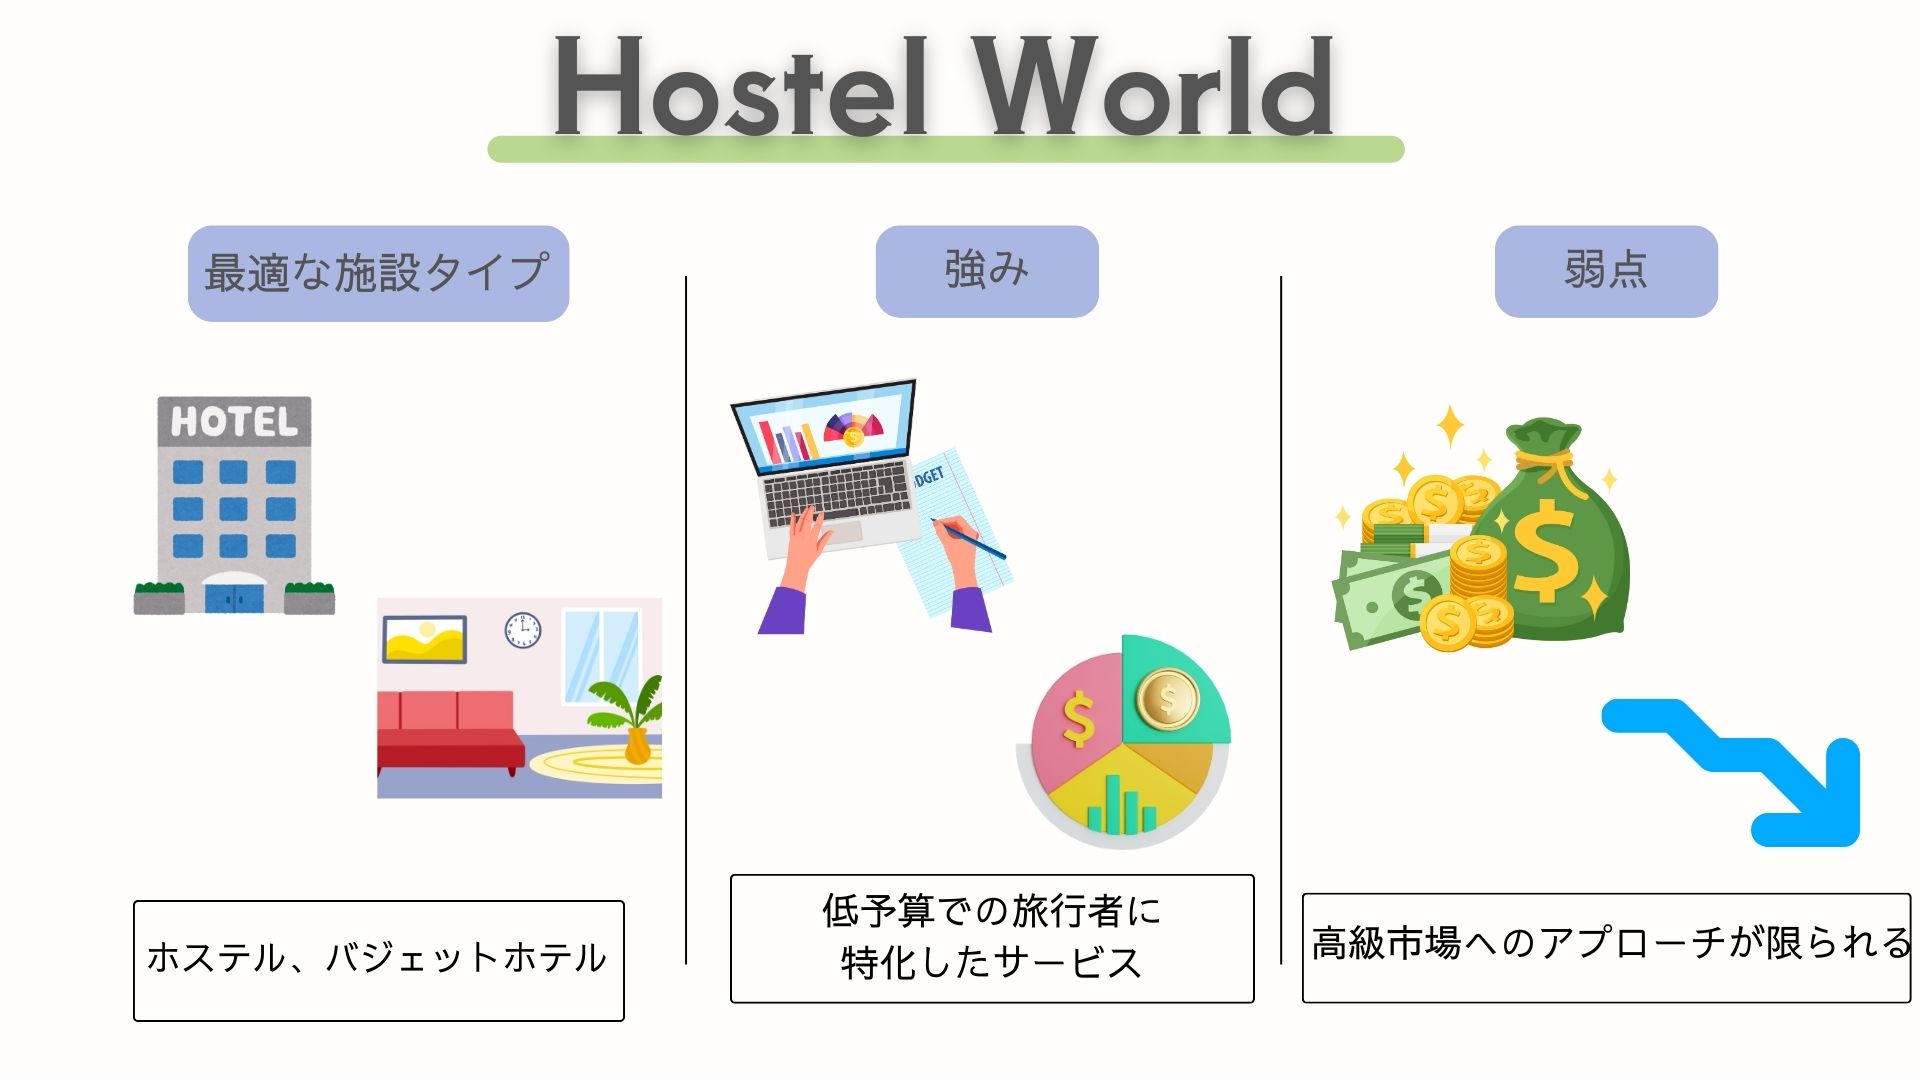  Hostel World